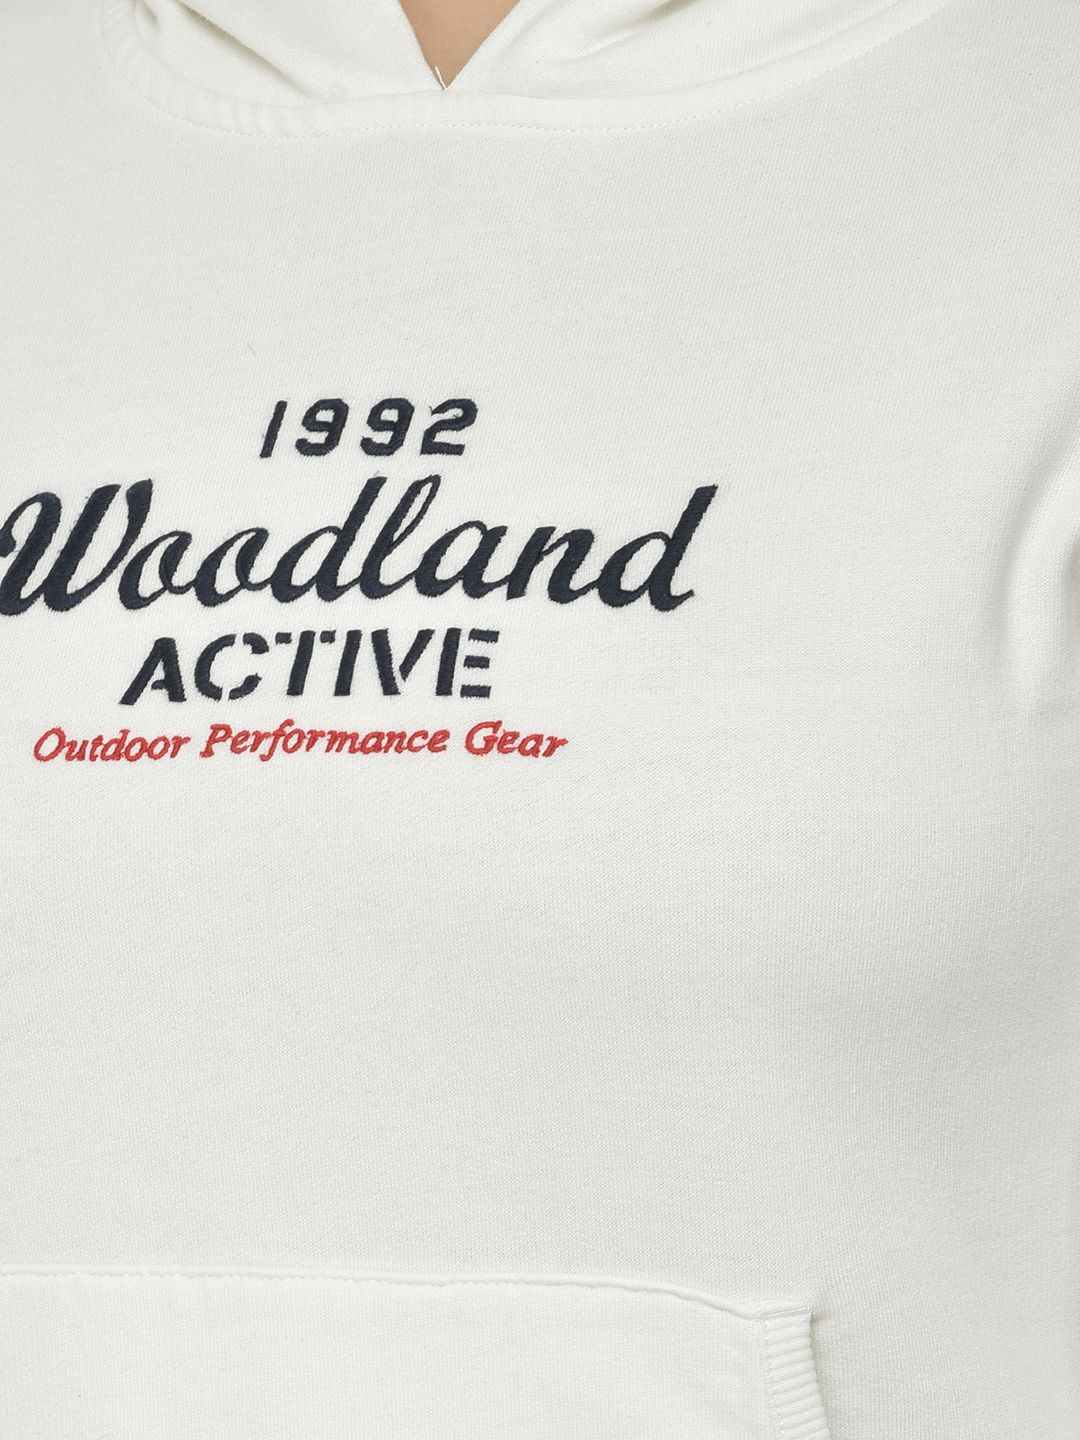 Woodland White Hooded Sweatshirt